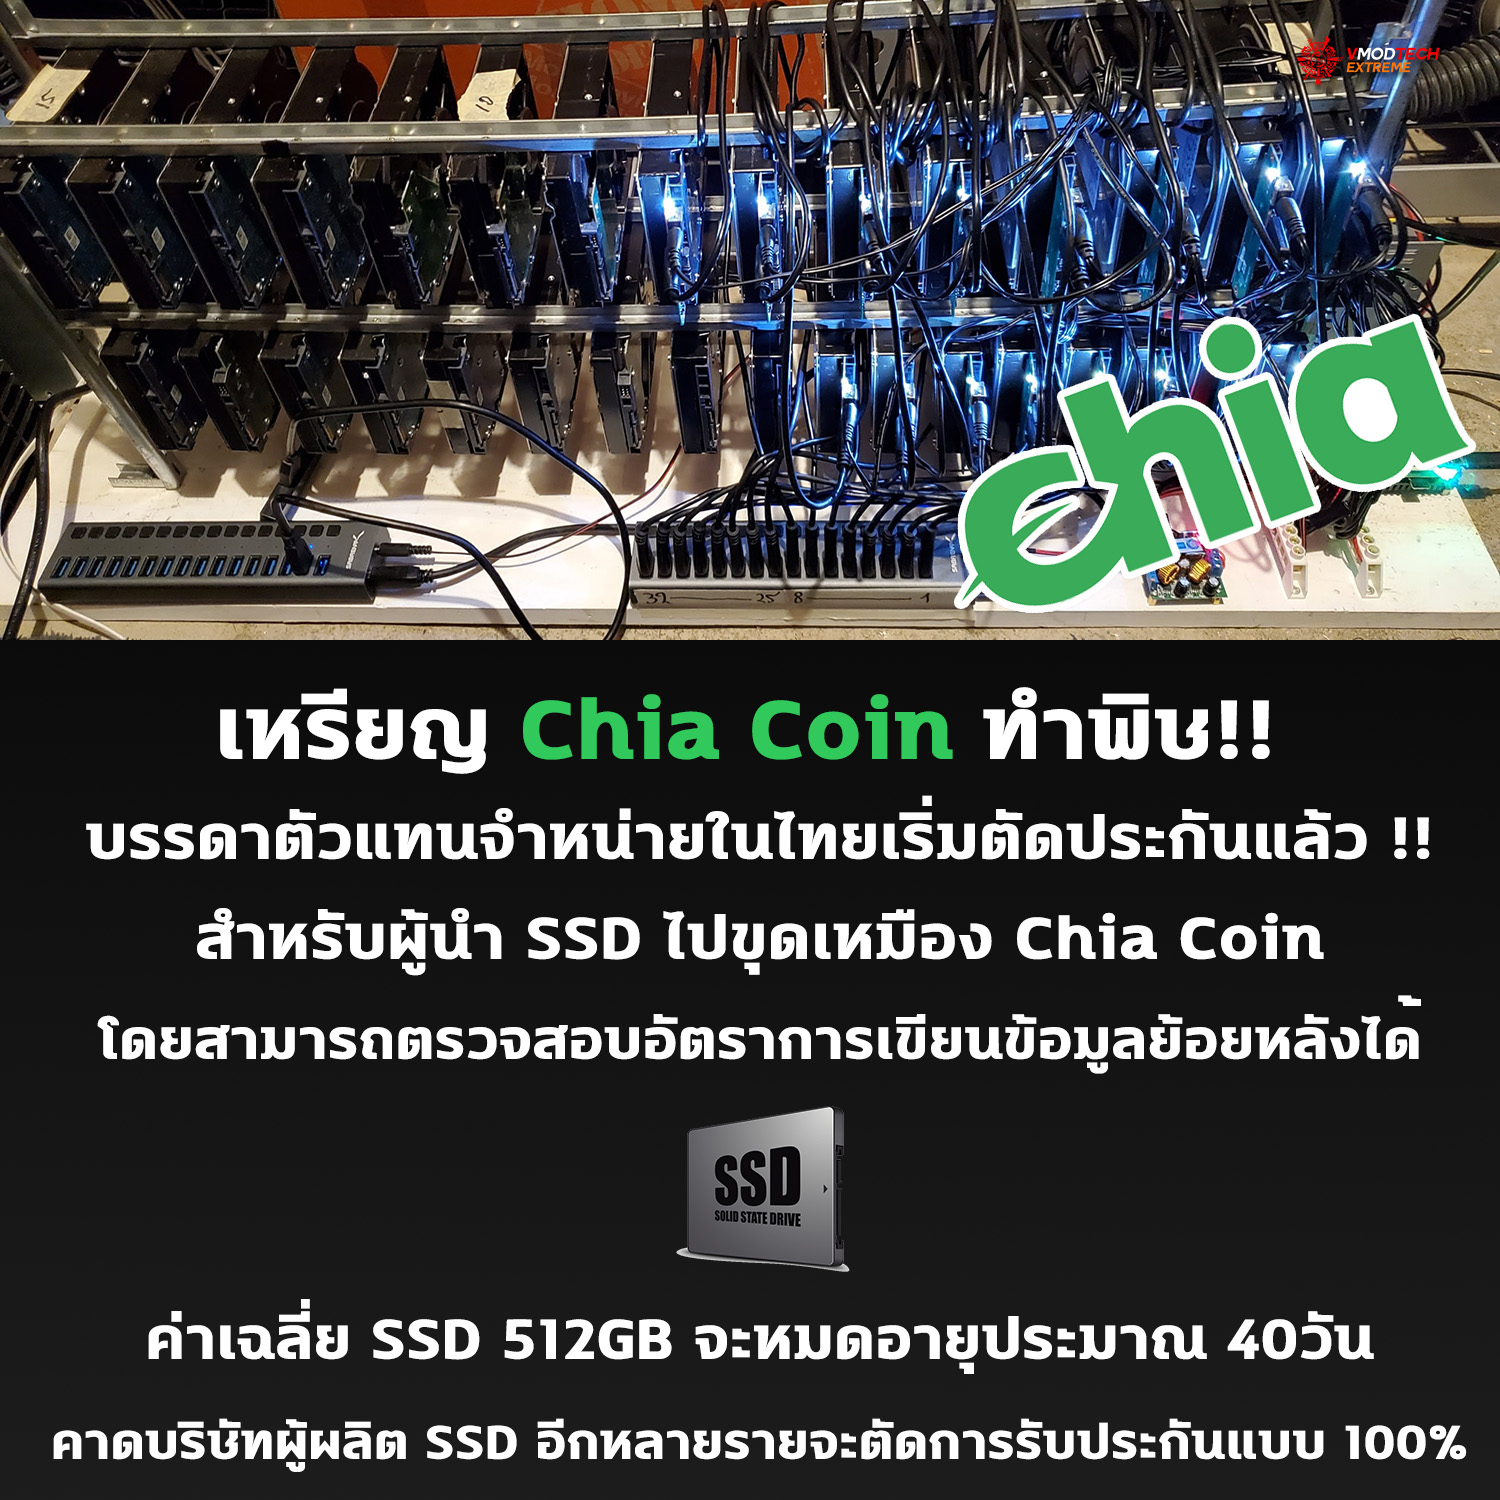 chia coin ssd เหรียญ Chia Coin ทำพิษ!! บรรดาตัวแทนจำหน่ายในไทยเริ่มตัดประกันแล้วสำหรับผู้นำ SSD ไปขุดเหมือง